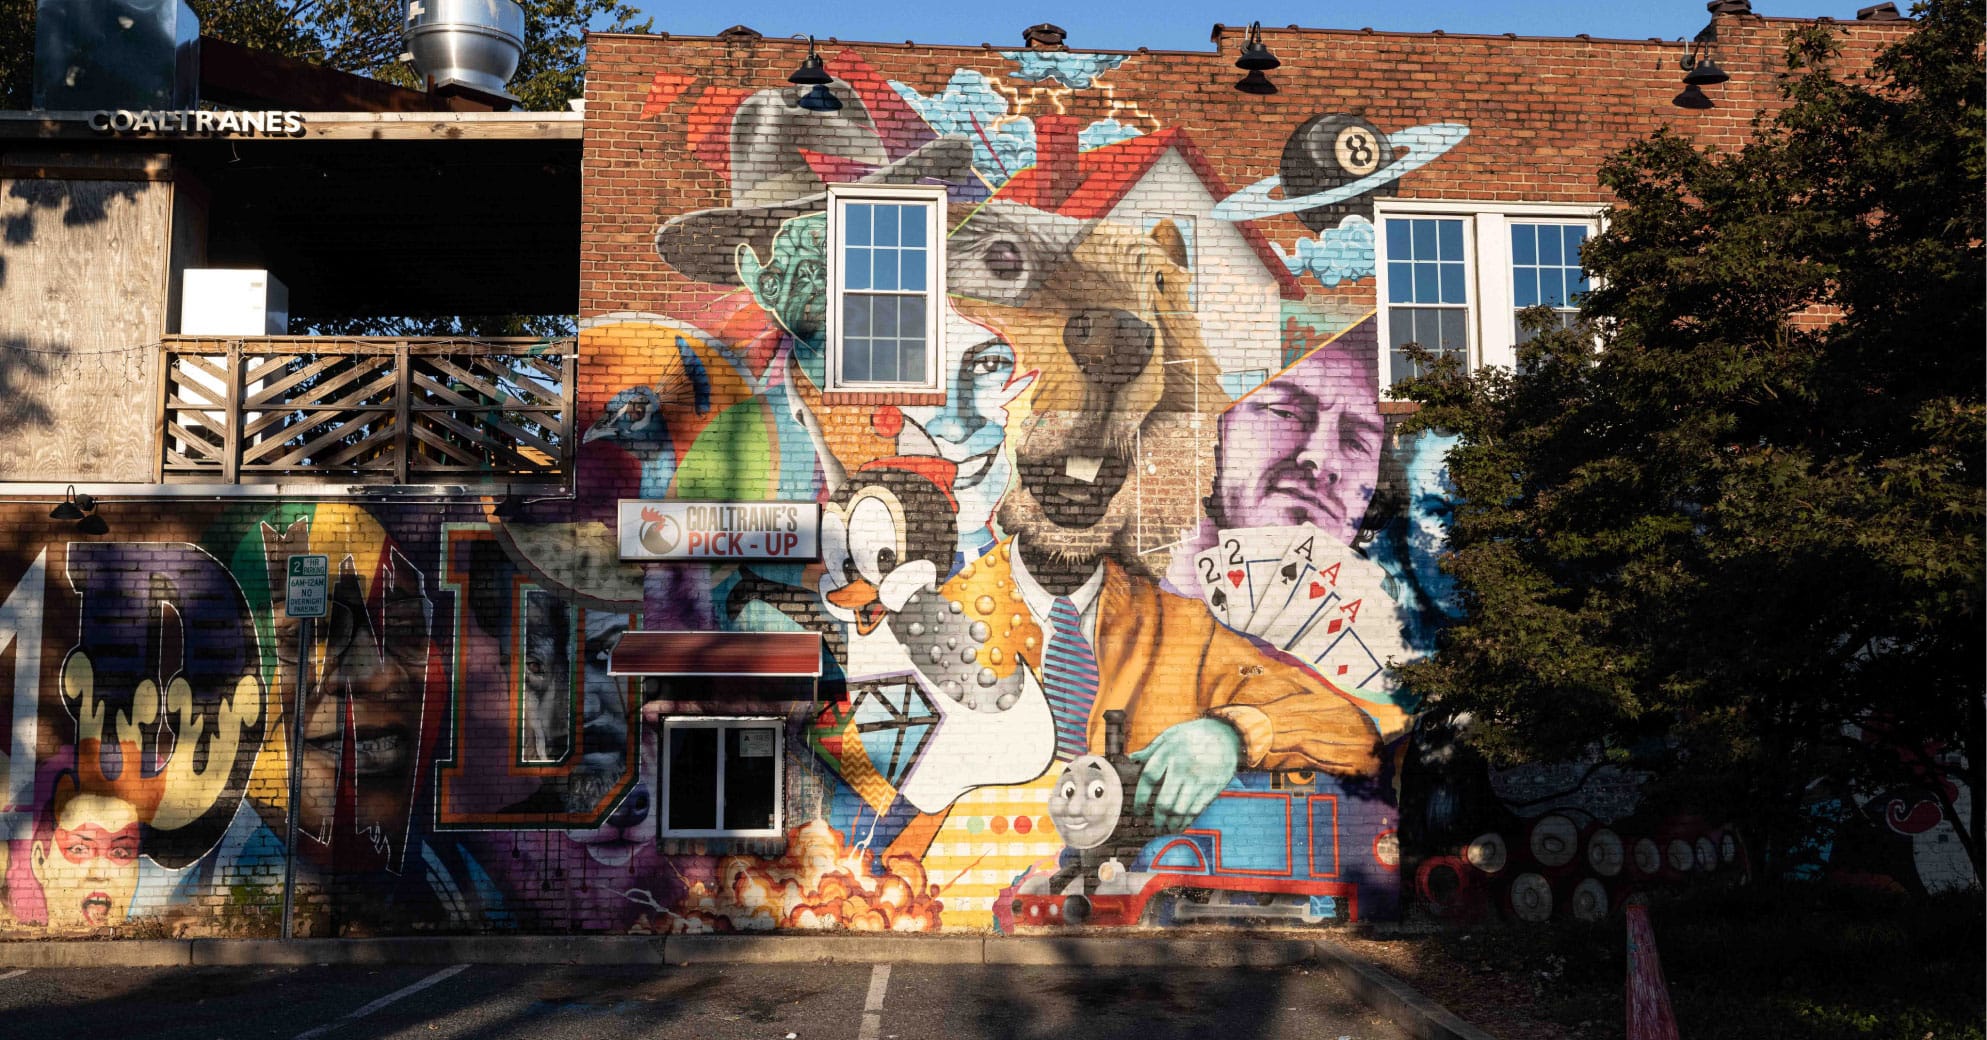 Vibrant mural on brick wall by Coaltrane's restaurant drive-thru window